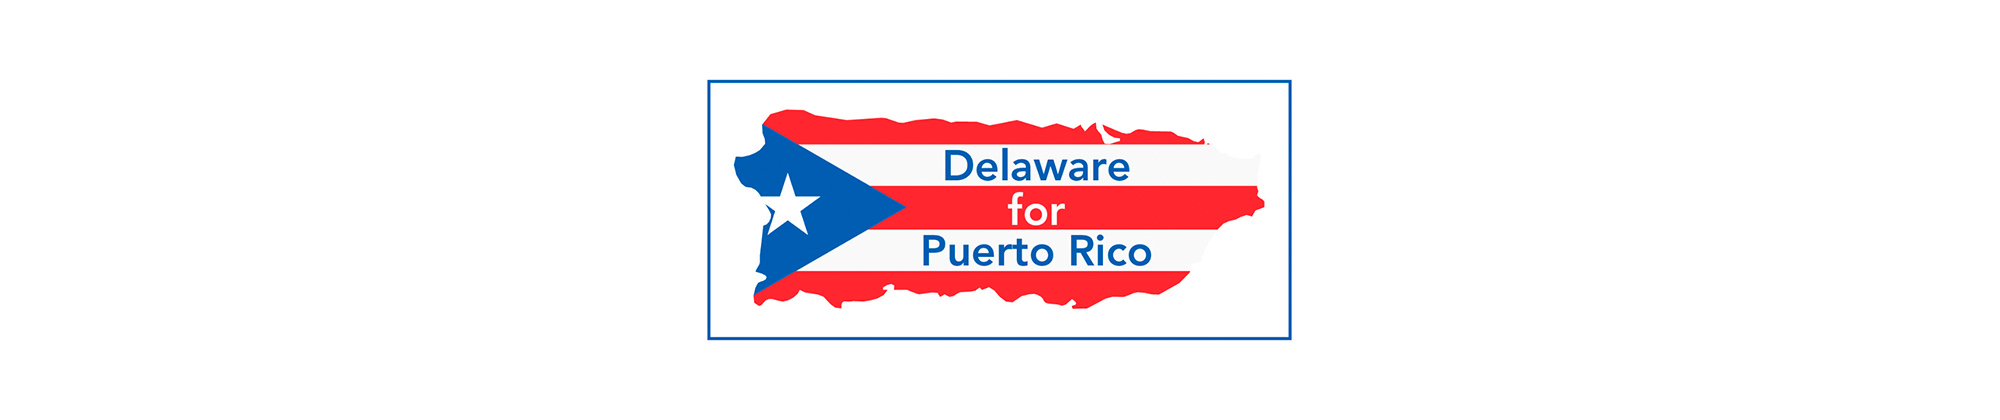 Delawarehispanic_Puerto_Rico_01